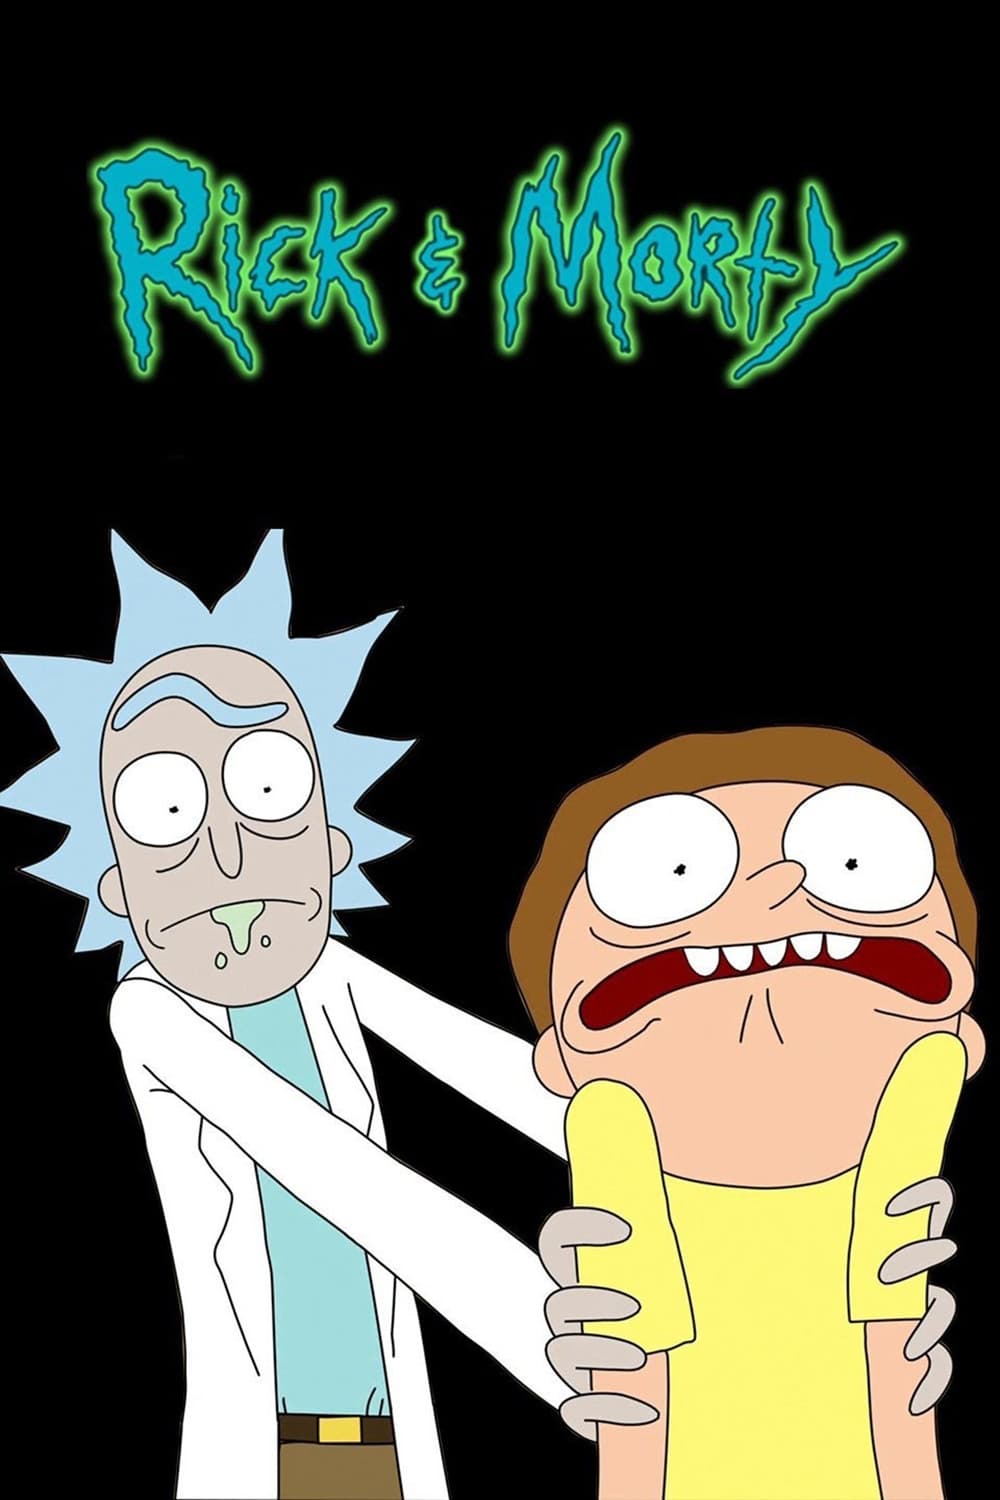 Rick & Morty S1